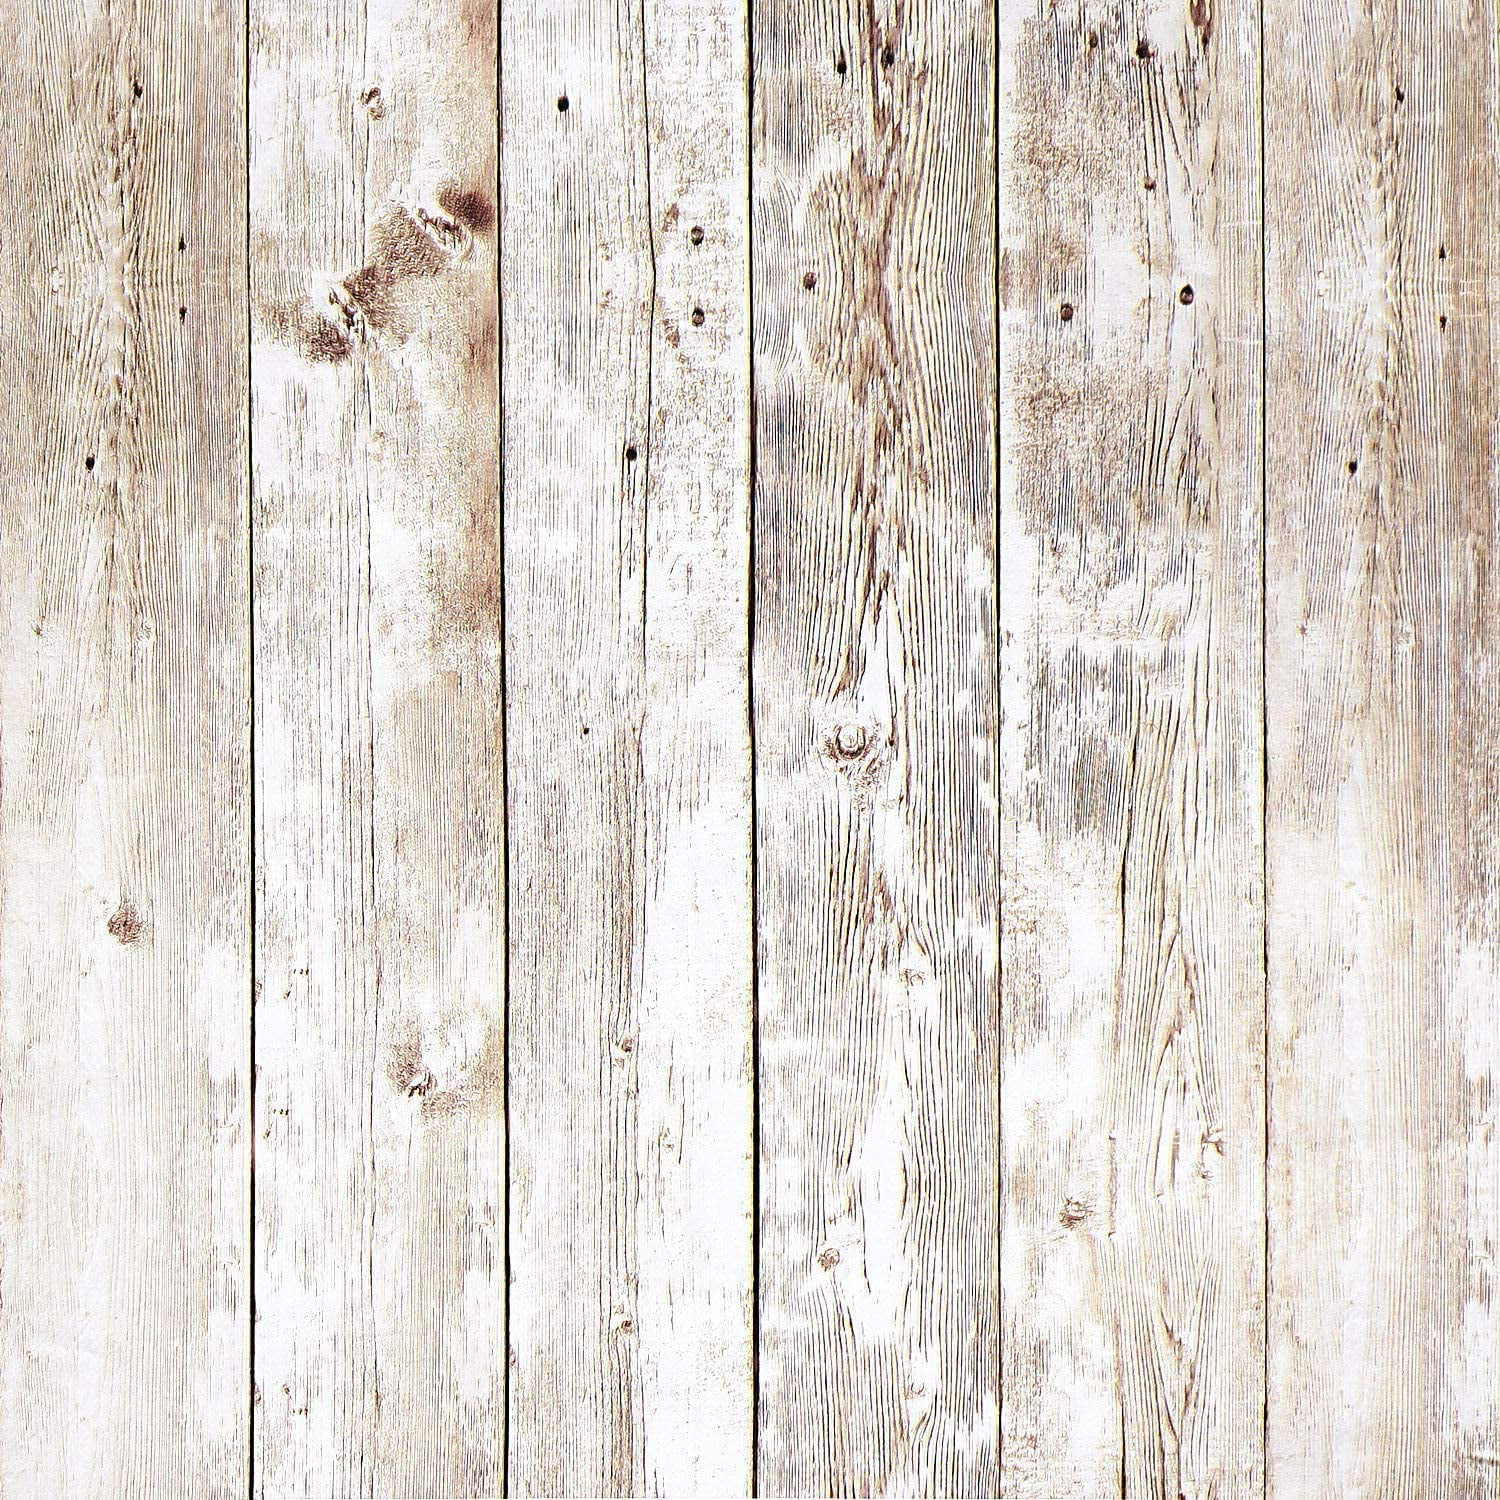 Wood Wallpaper Wood Plank Wallpaper Peel and Stick on Wallpaper Wood Look  Wood Effect Wallpaper Self Adhesive Wallpaper Stick on Wallpaper Rustic  Distressed Barn Wood Shiplap Wallpaper 45x300cm | Walmart Canada